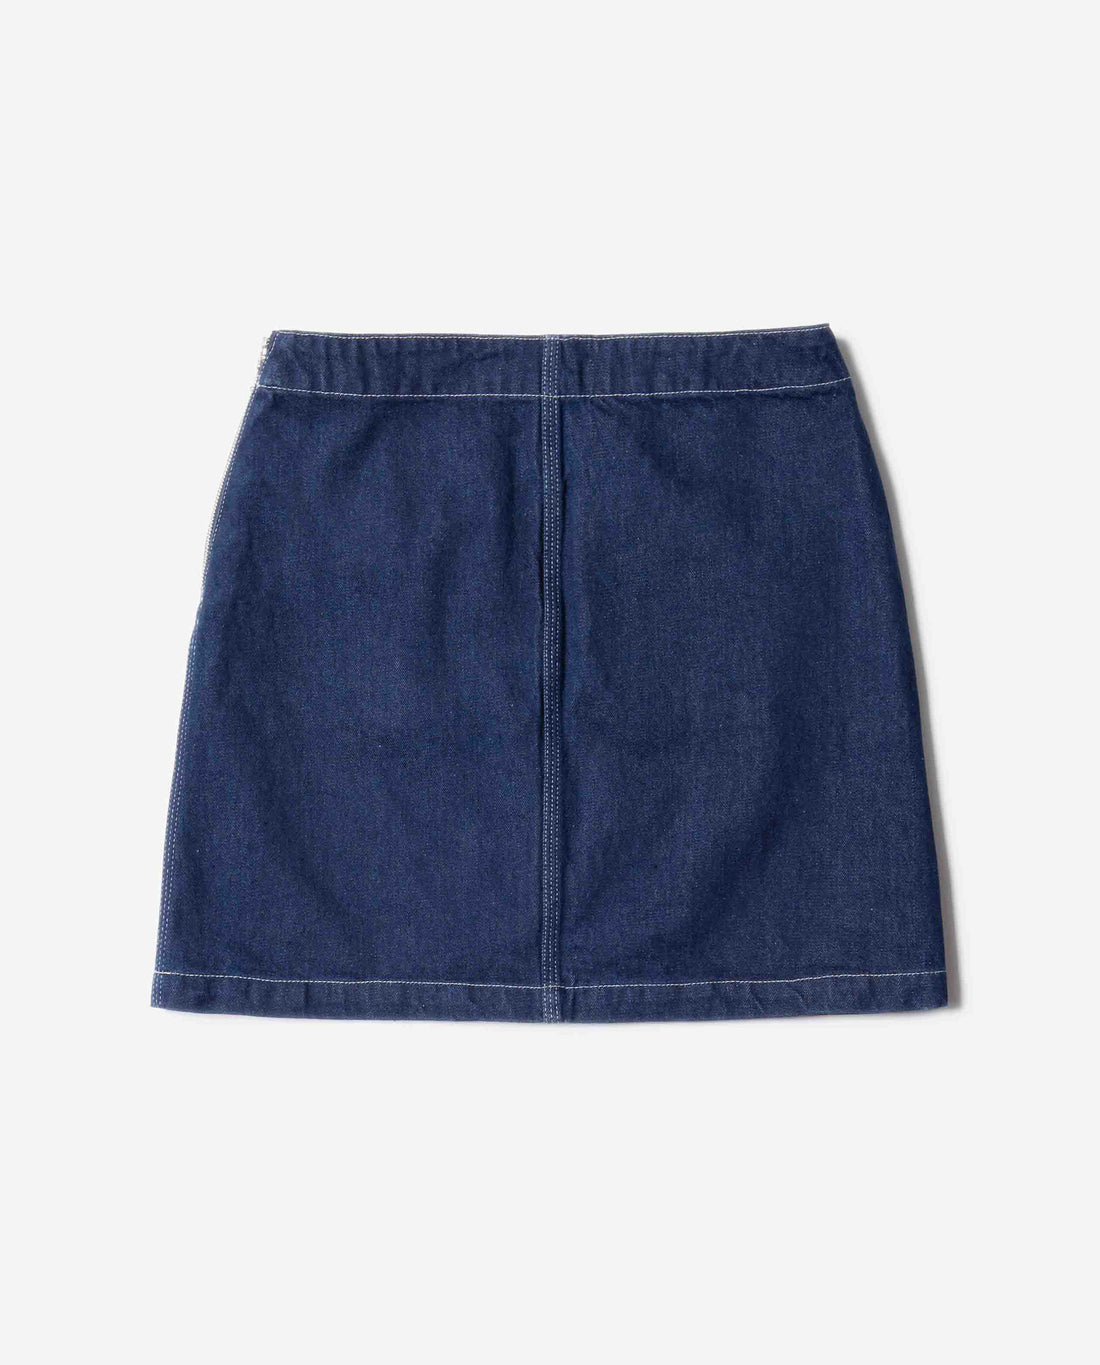 Marché Commun Nudie Jeans Elvy Western Denim Skirt Blue